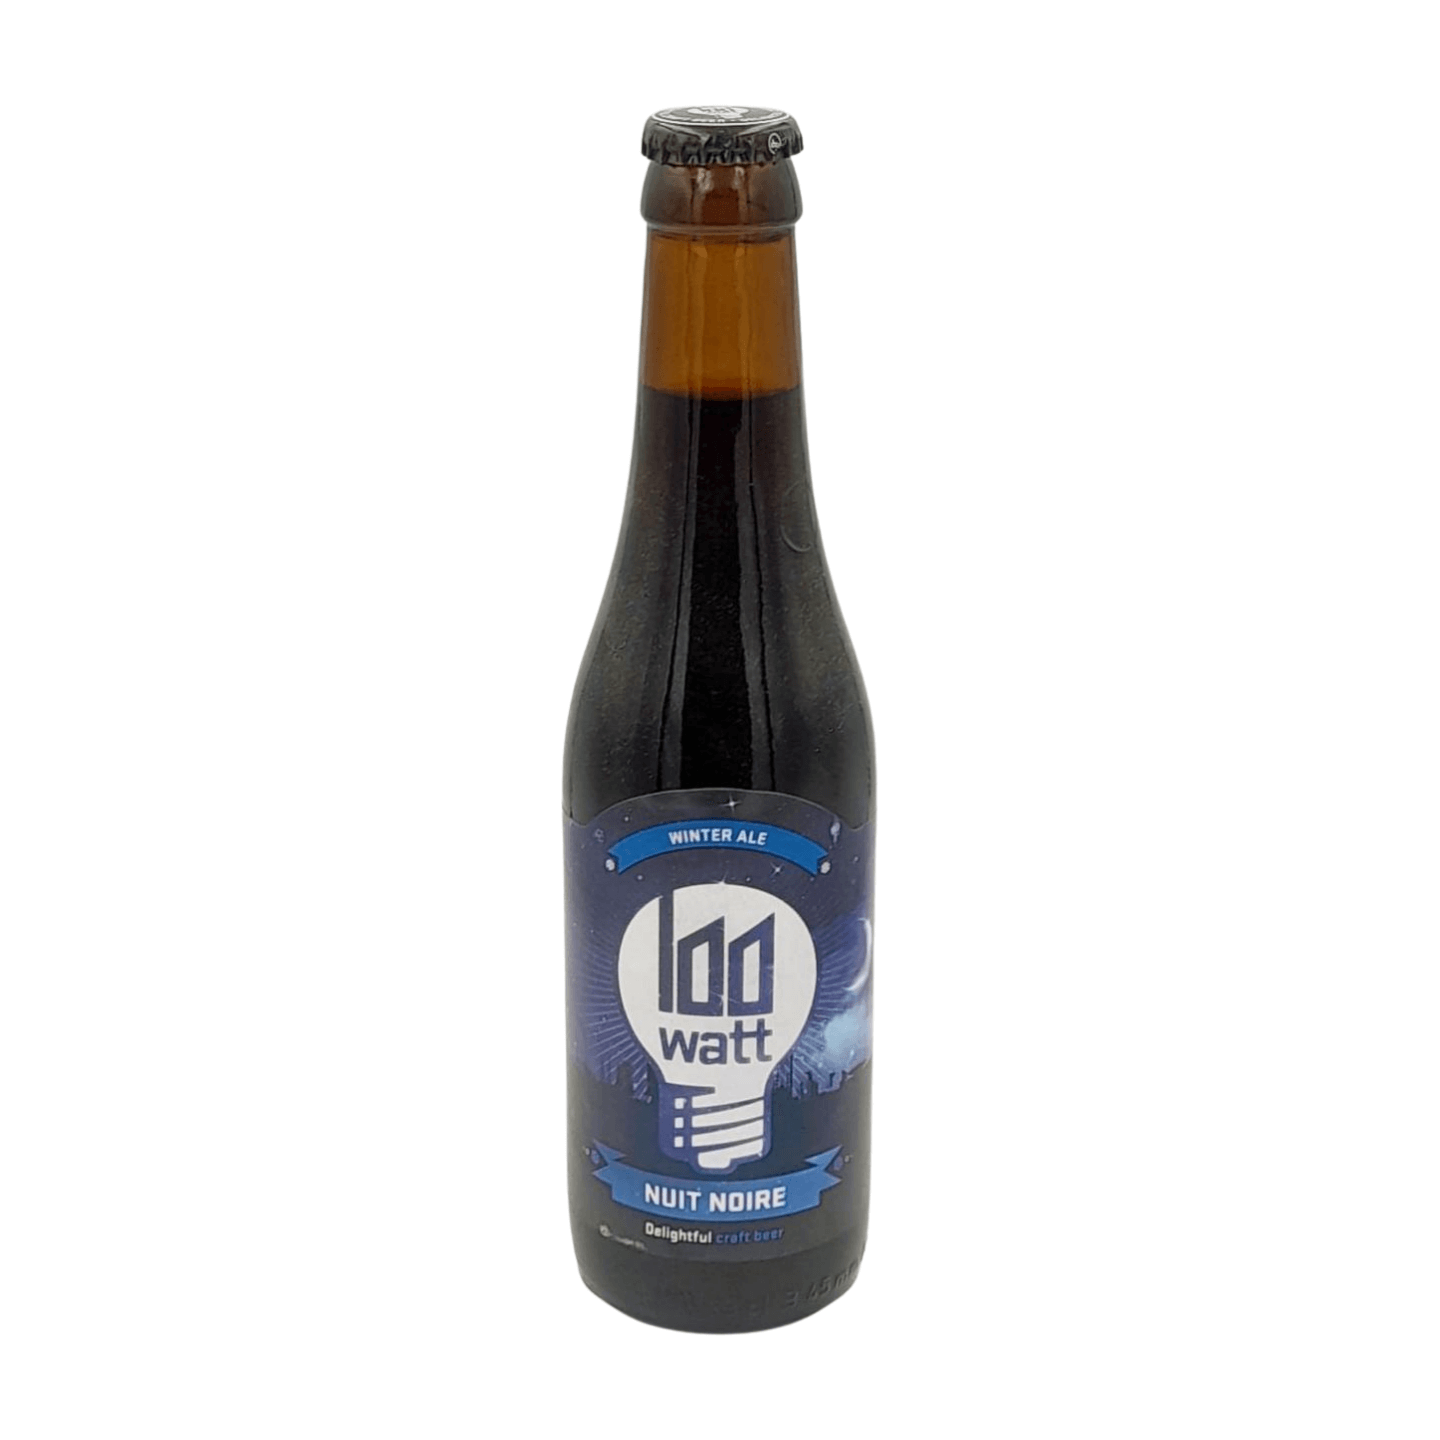 100 Watt Brewery Nuit Noire | Quadrupel Webshop Online Verdins Bierwinkel Rotterdam